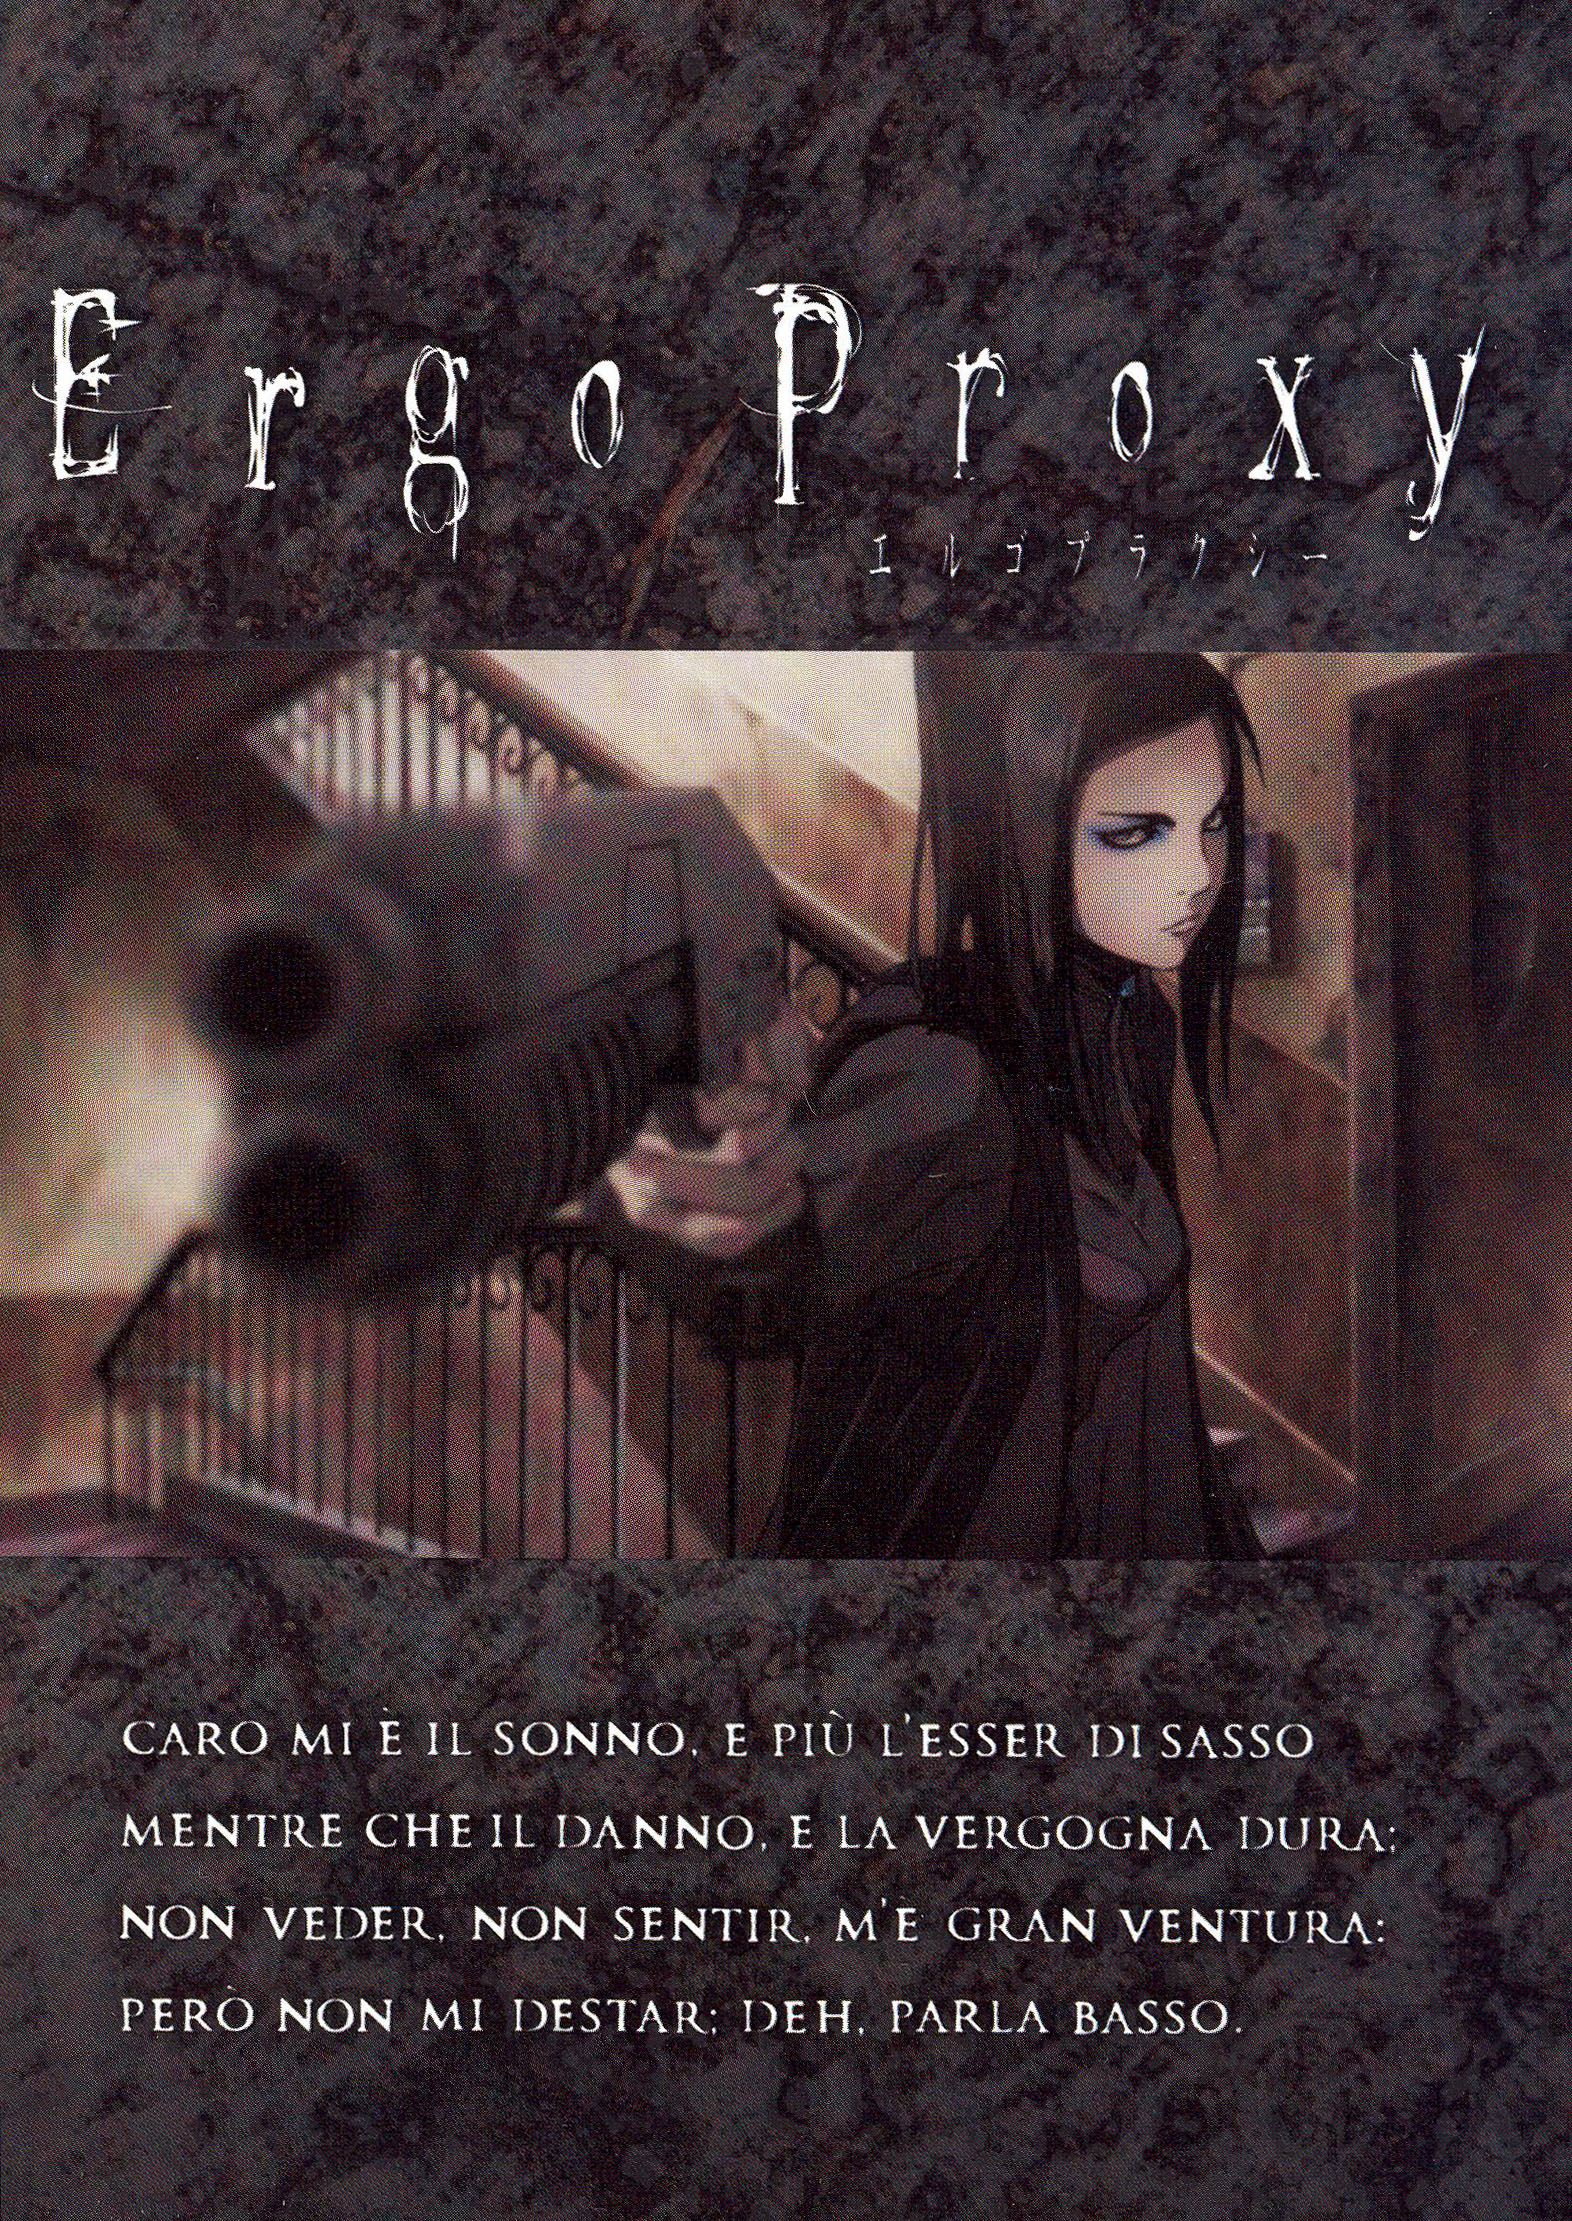 Ergo Proxy, Volume 1: Awakening [DVD]